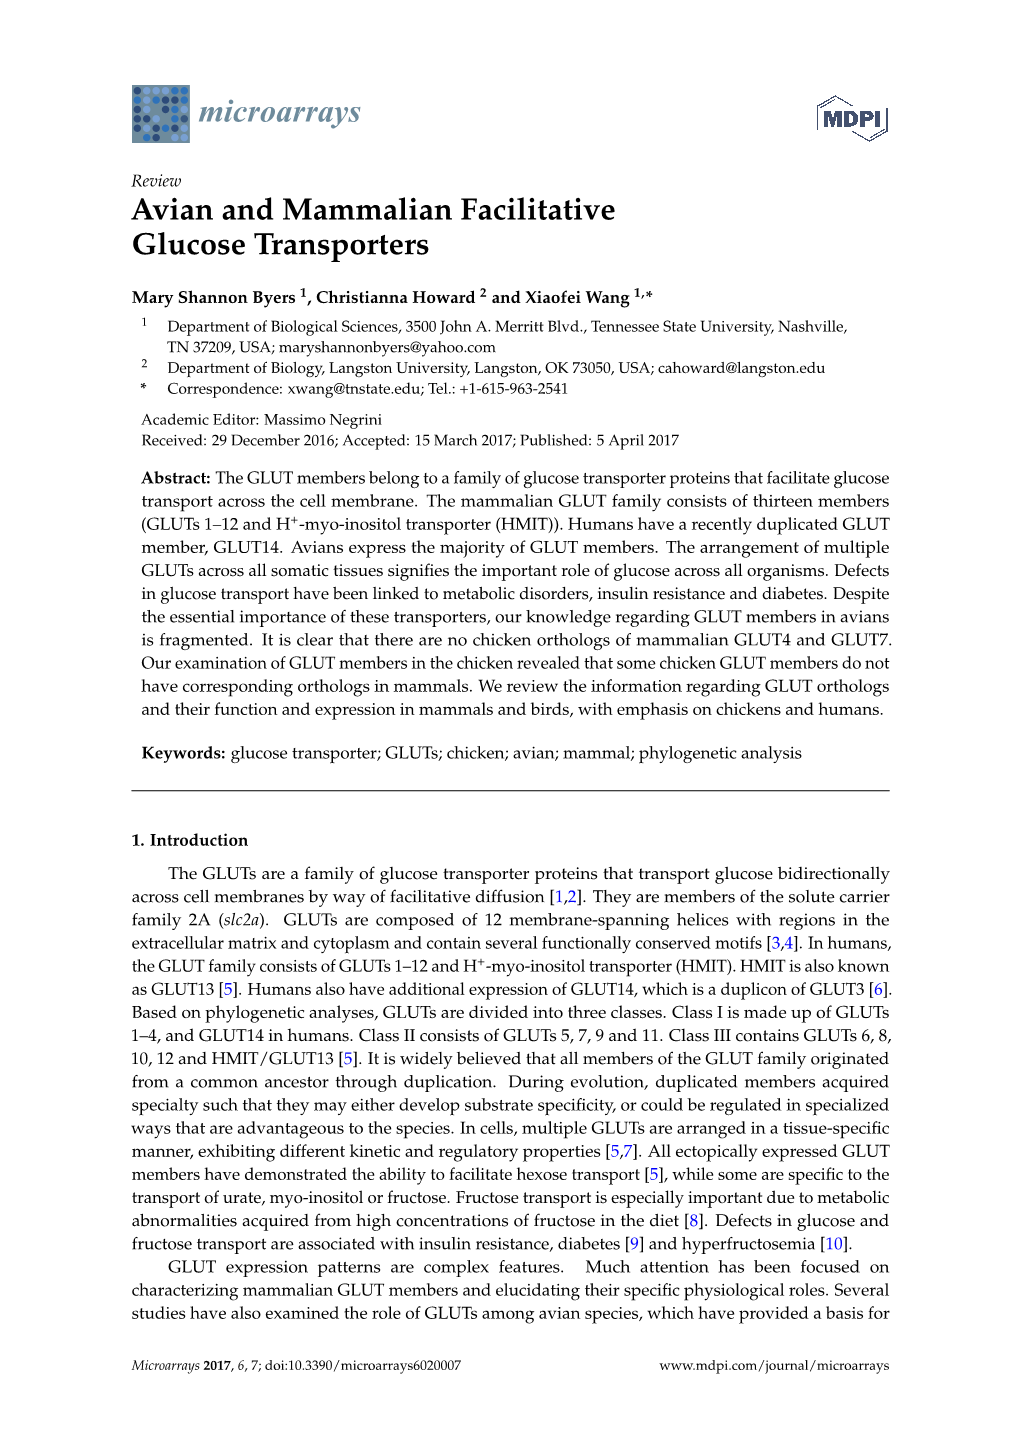 Avian and Mammalian Facilitative Glucose Transporters